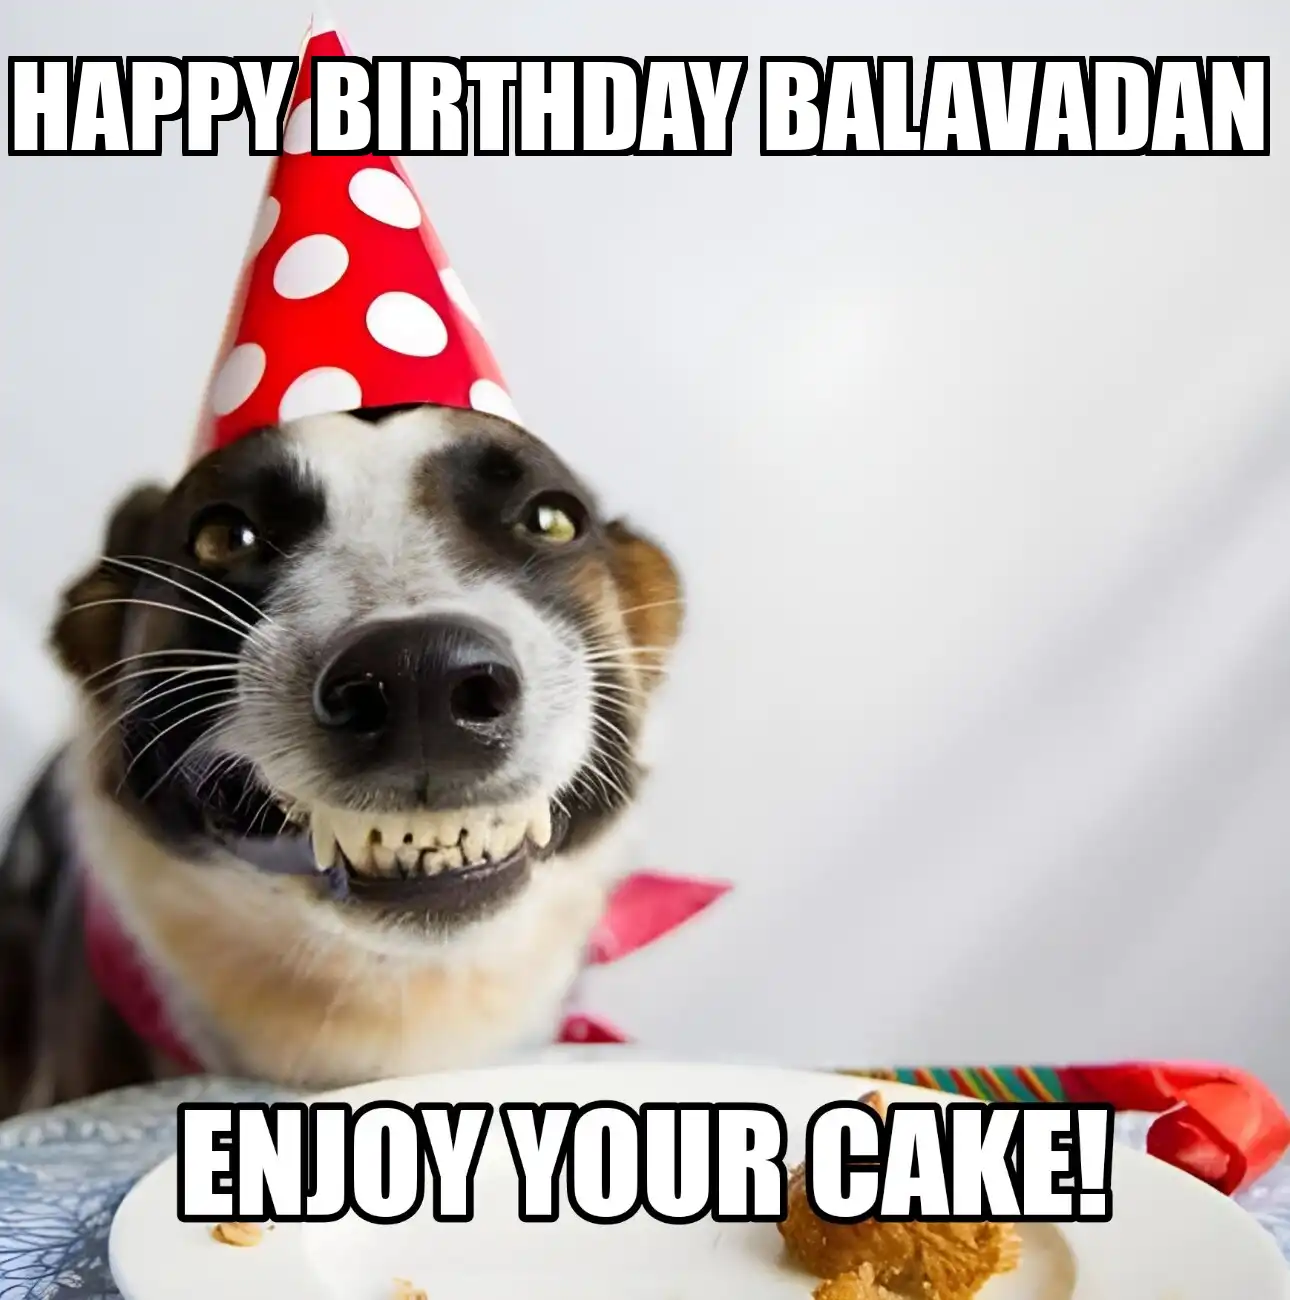 Happy Birthday Balavadan Enjoy Your Cake Dog Meme